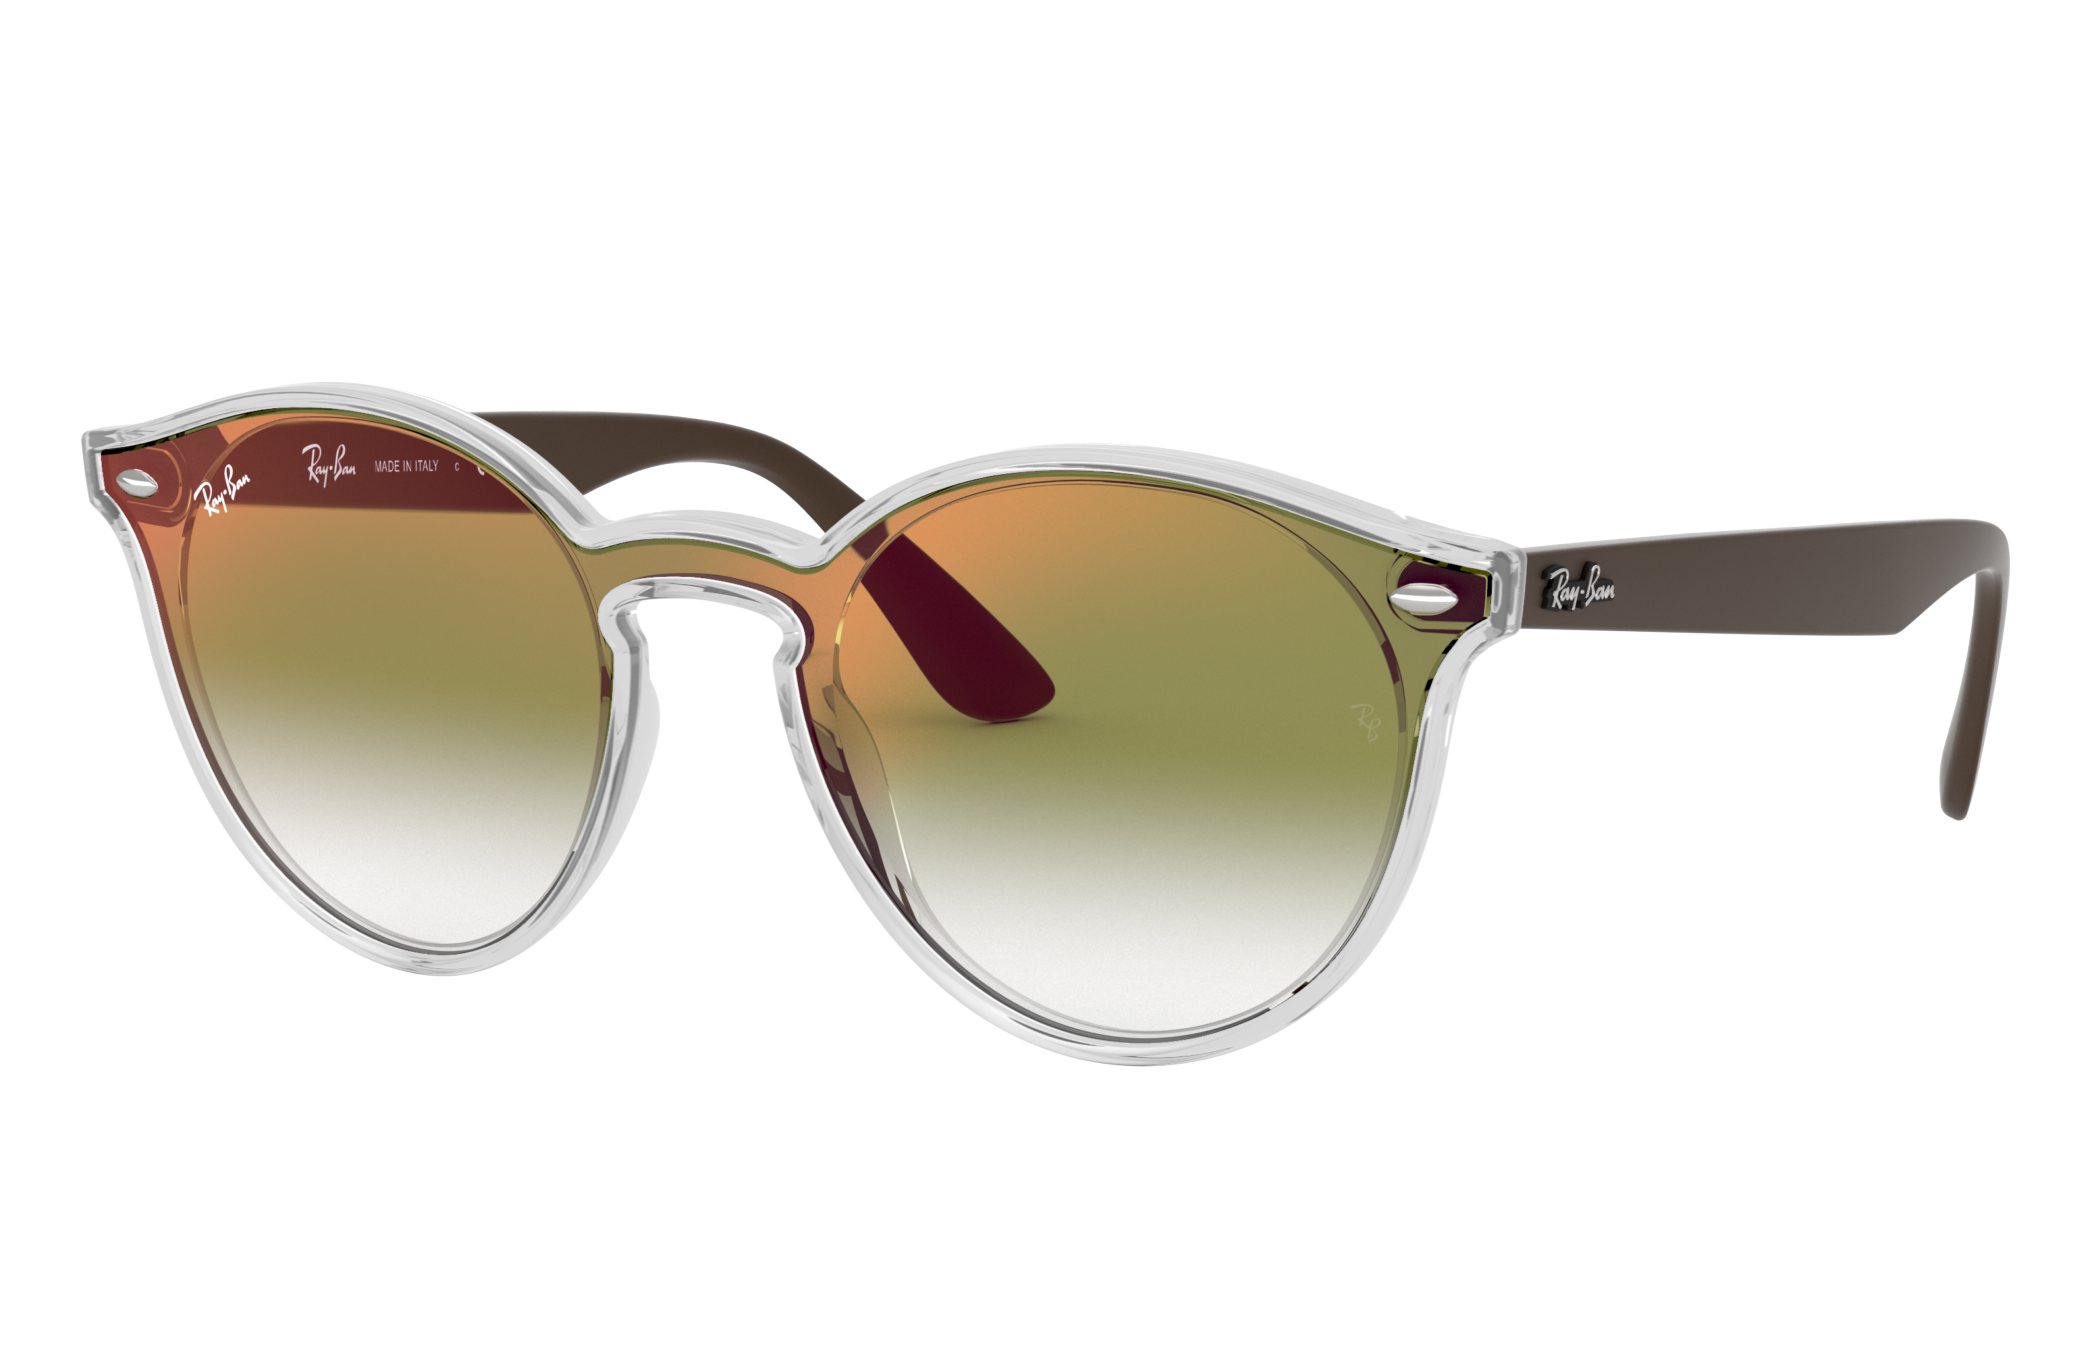 ray ban transparent sunglasses